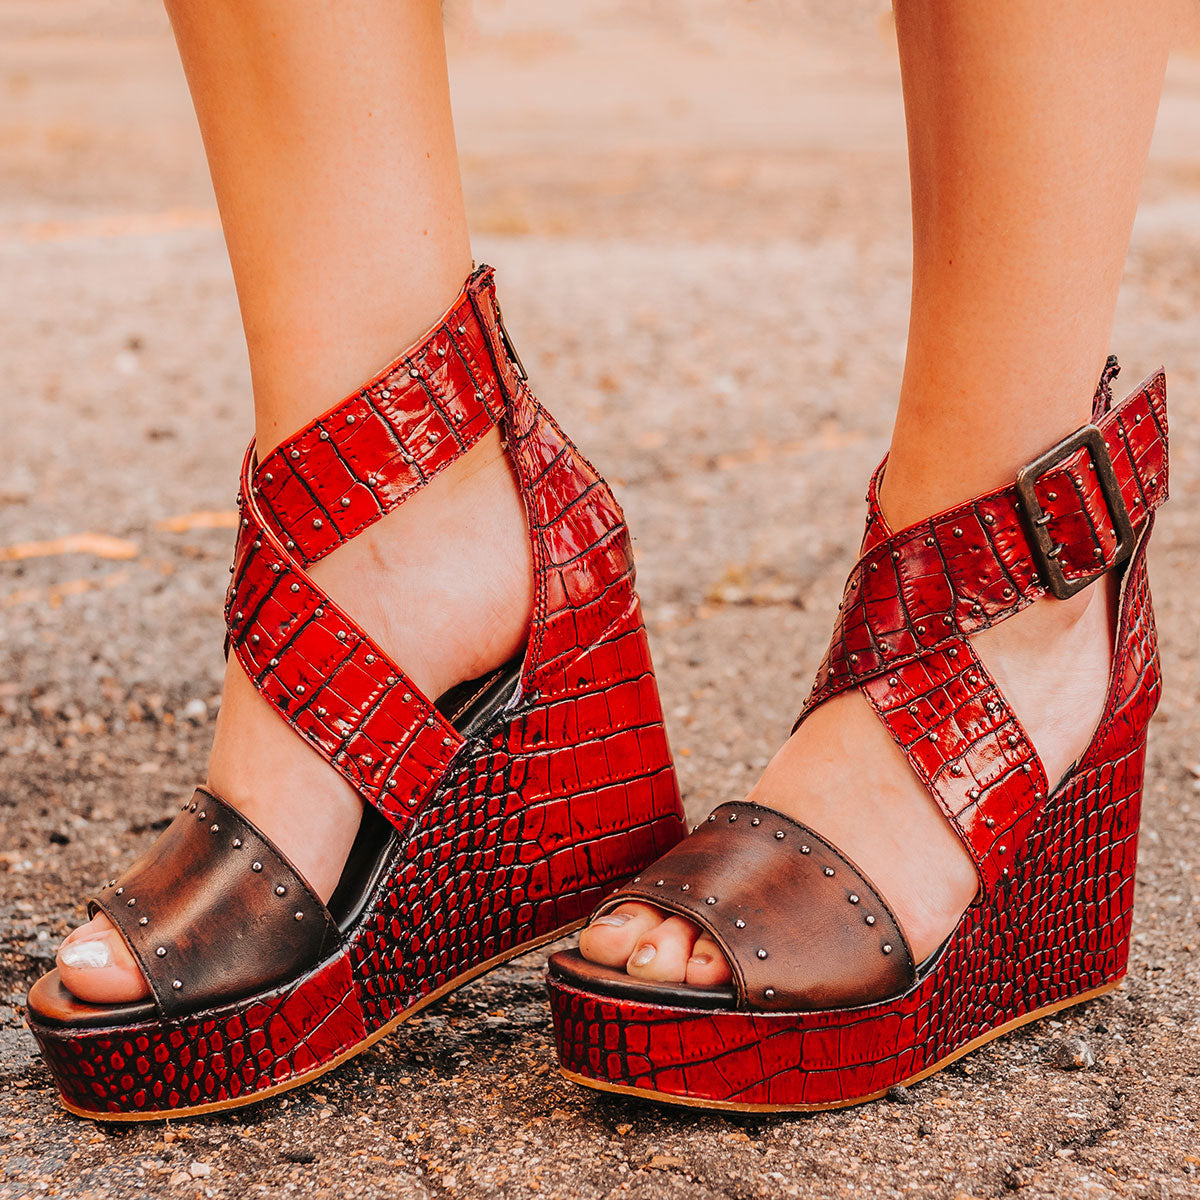 FREEBIRD women's Terra red croco multi platform sandal with wedge heel, an adjustable ankle strap, and stud detailing